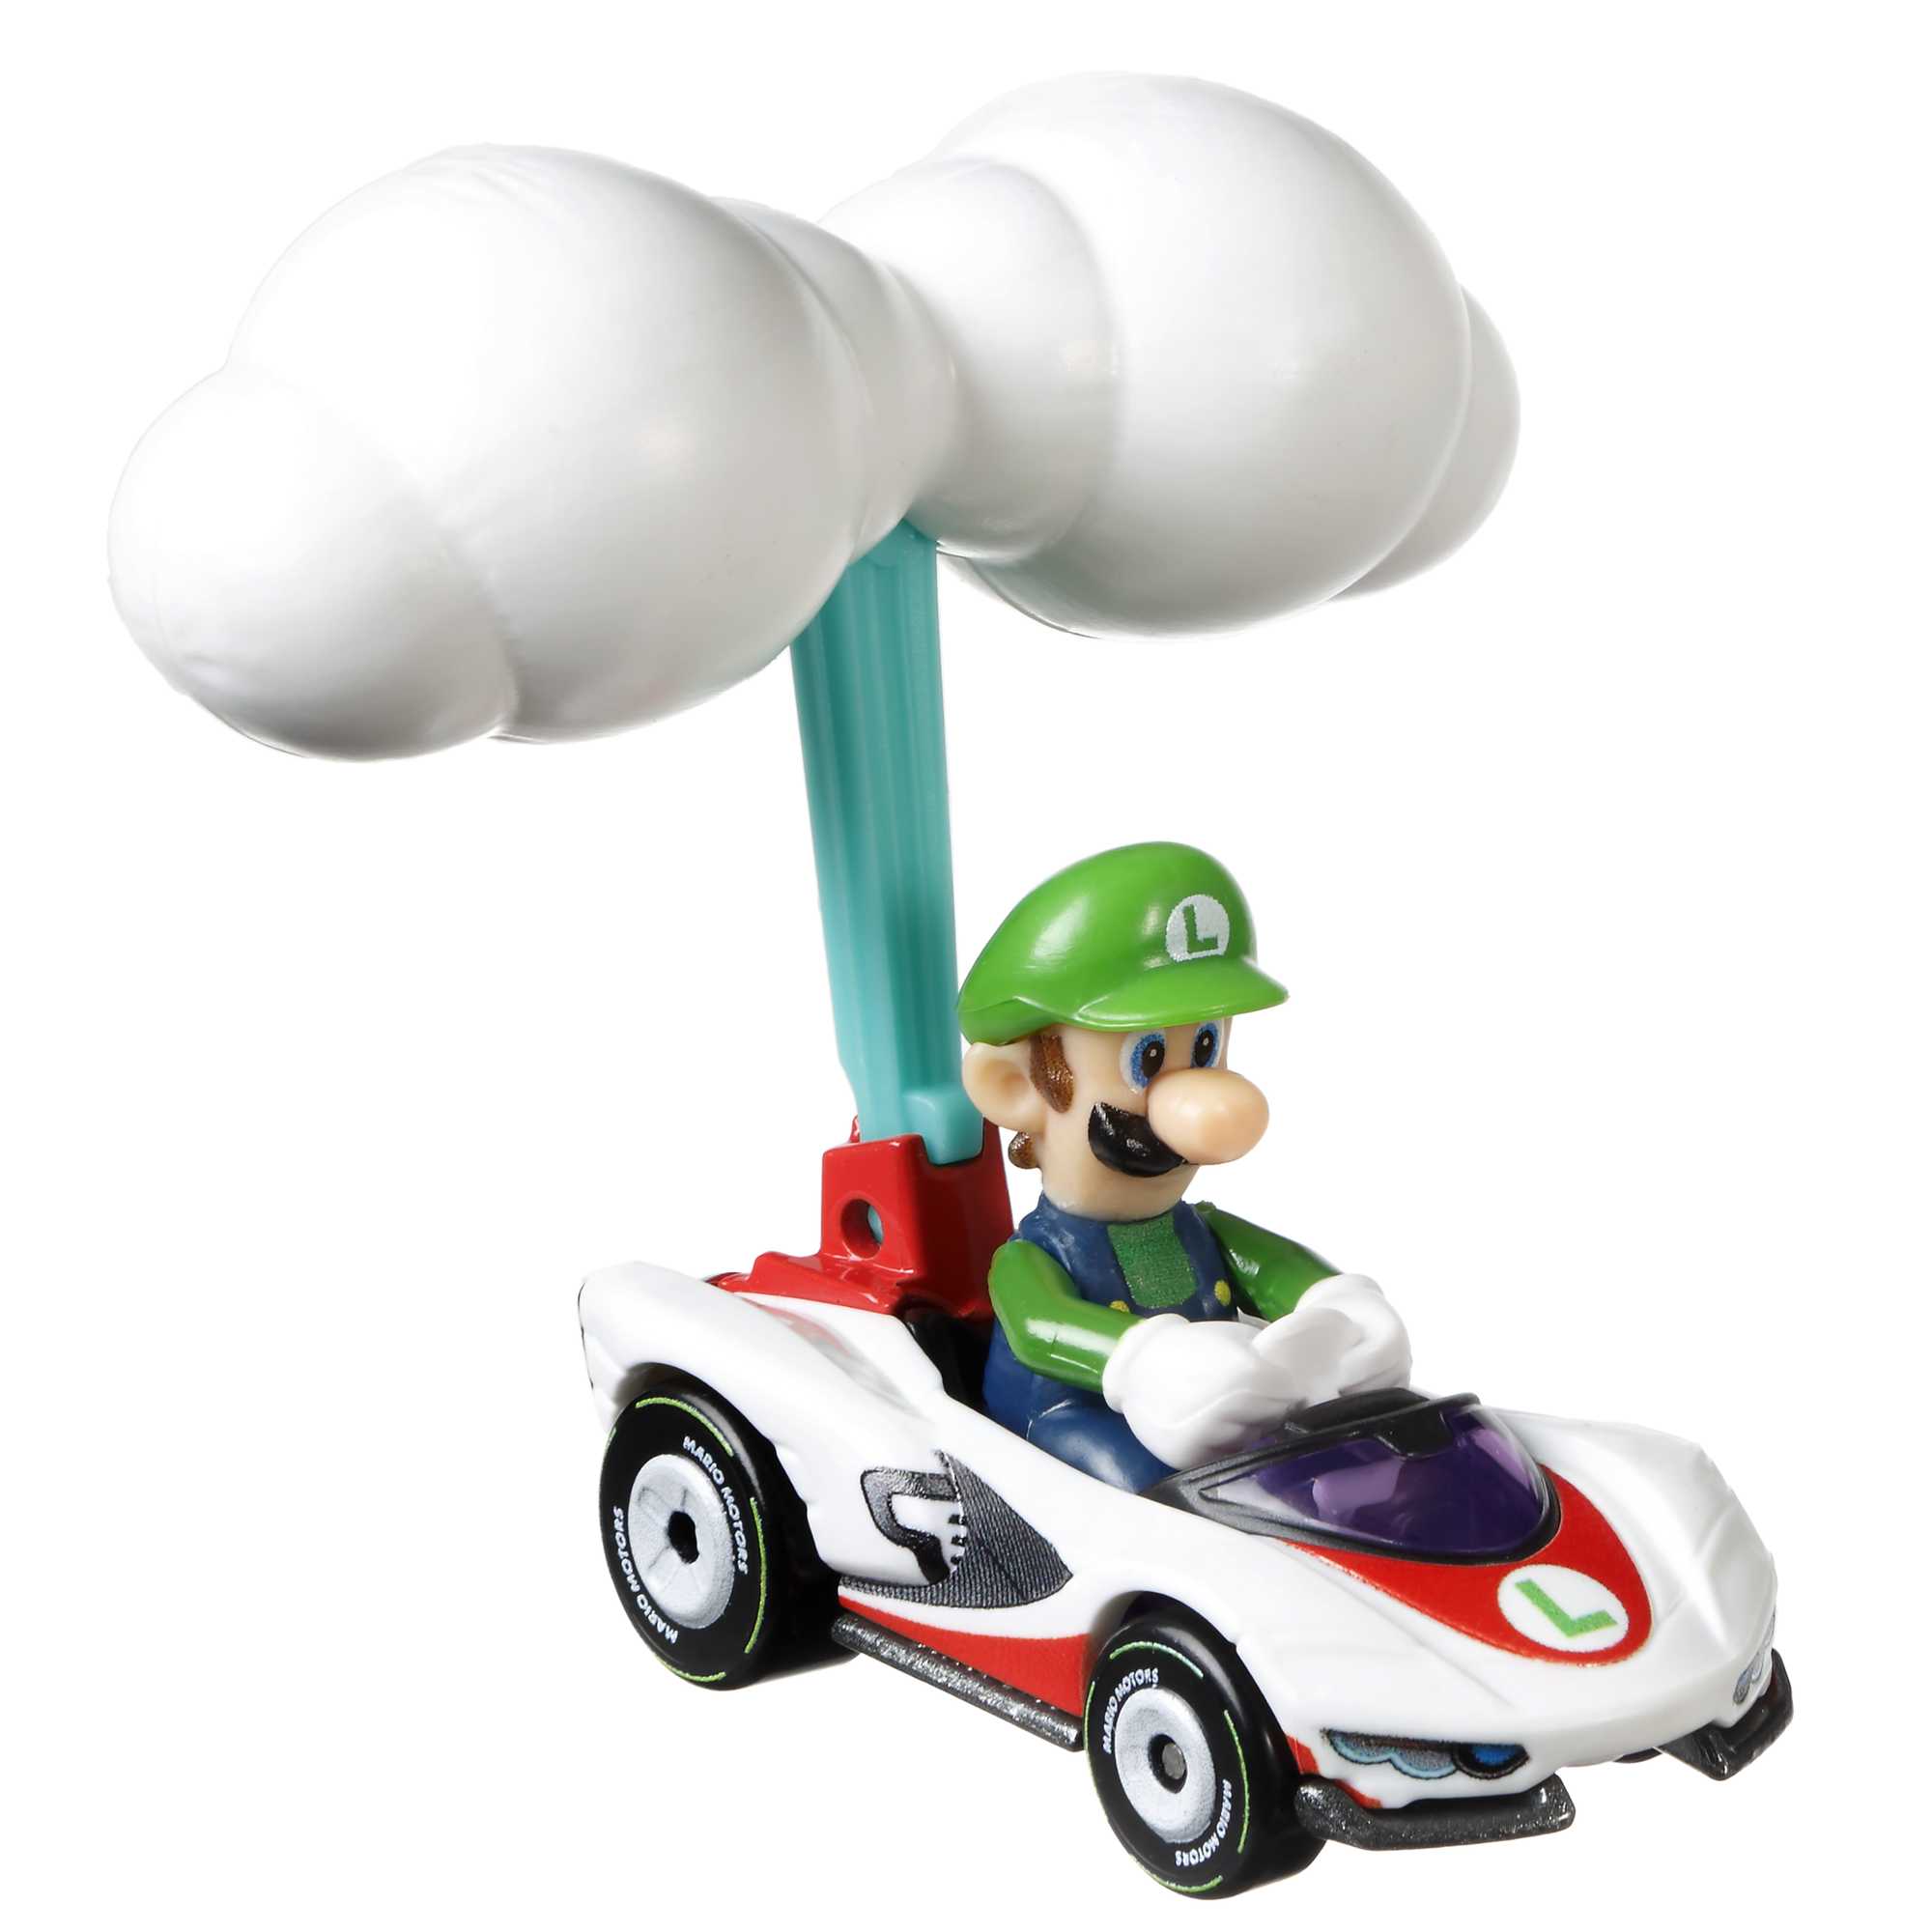 DieCast Hotwheels Mario Kart Luigi Circuit Special